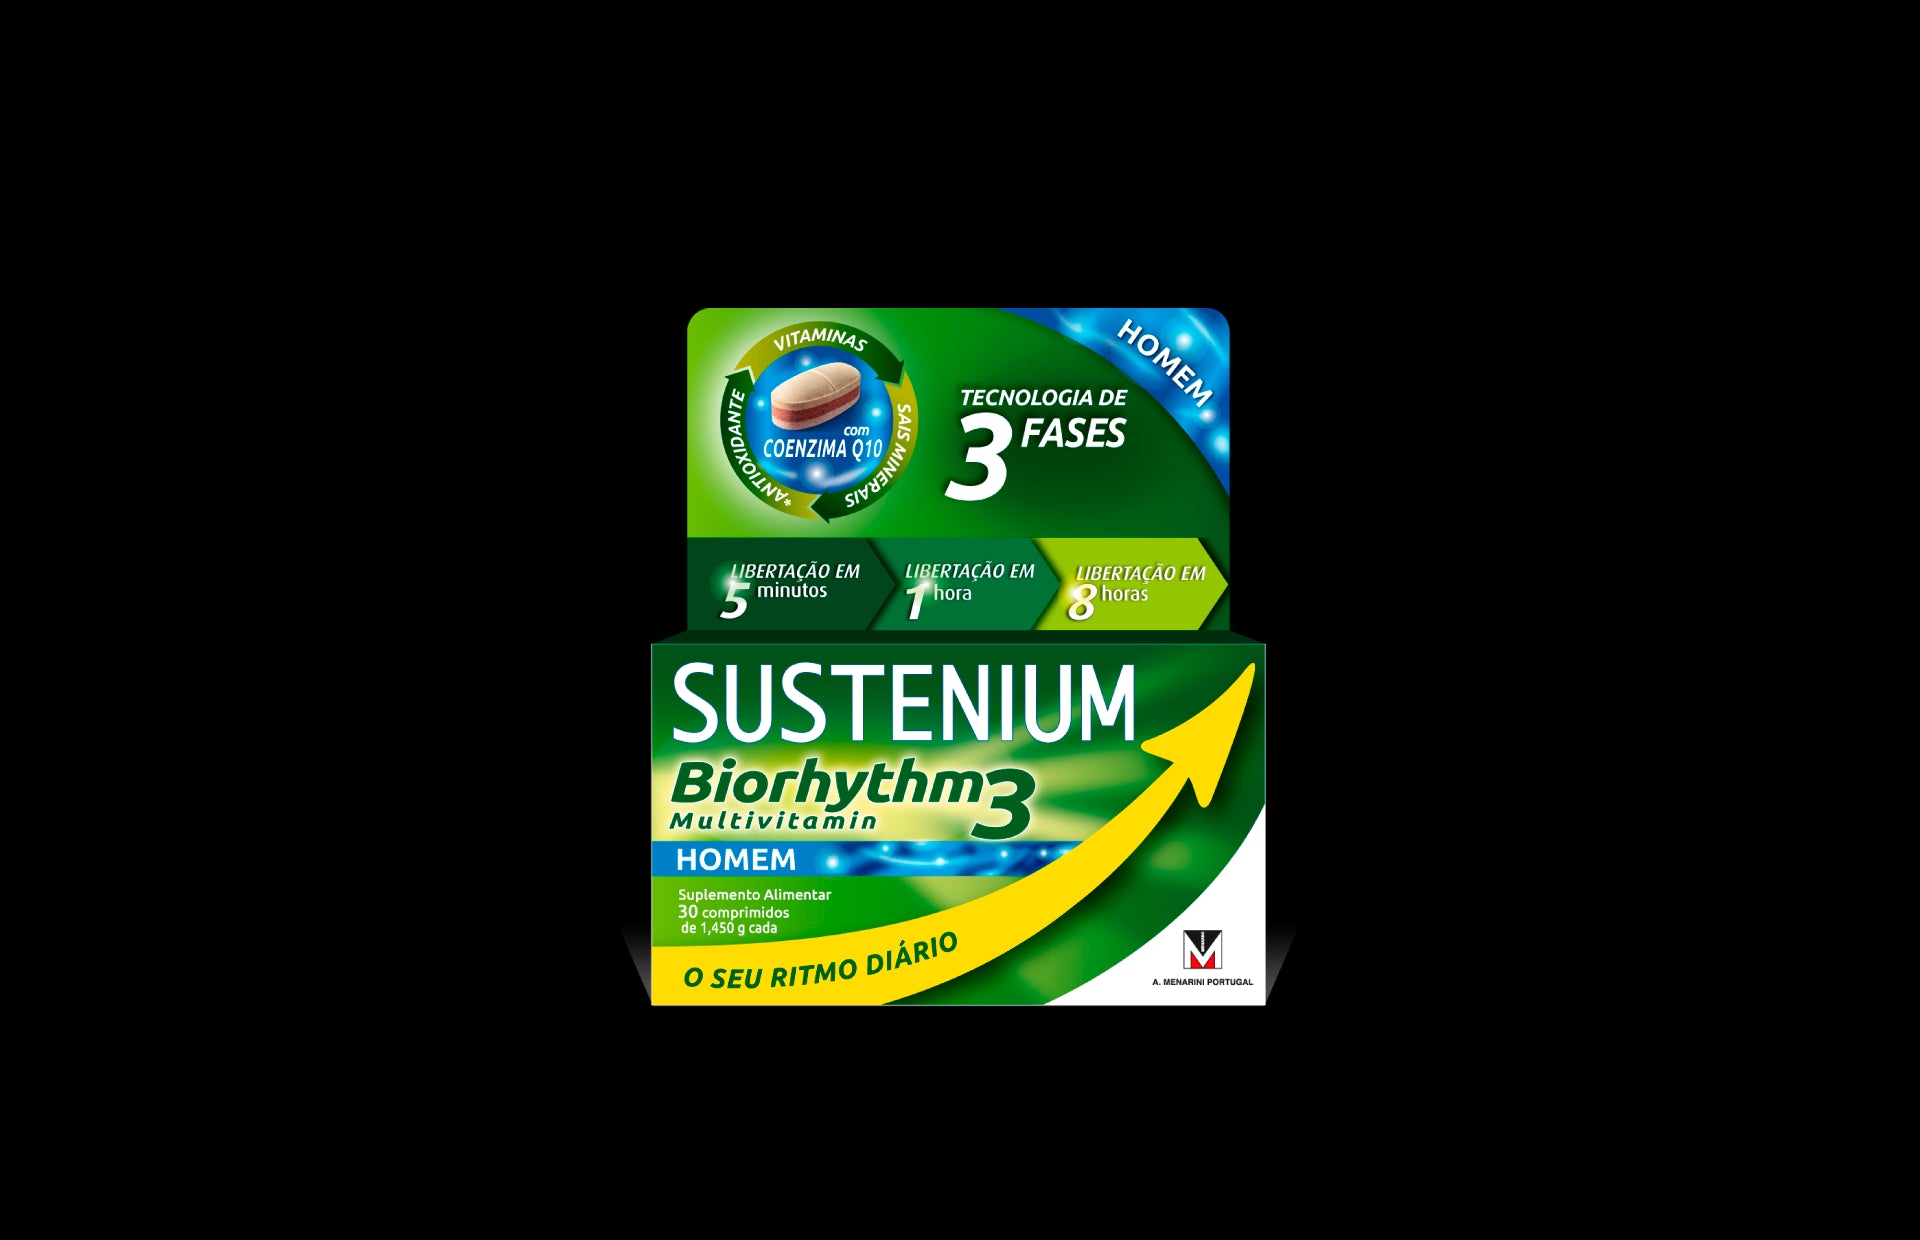 Sustenium Biorhytmo Multivitamino_ Man (x30 tablets) - Healtsy